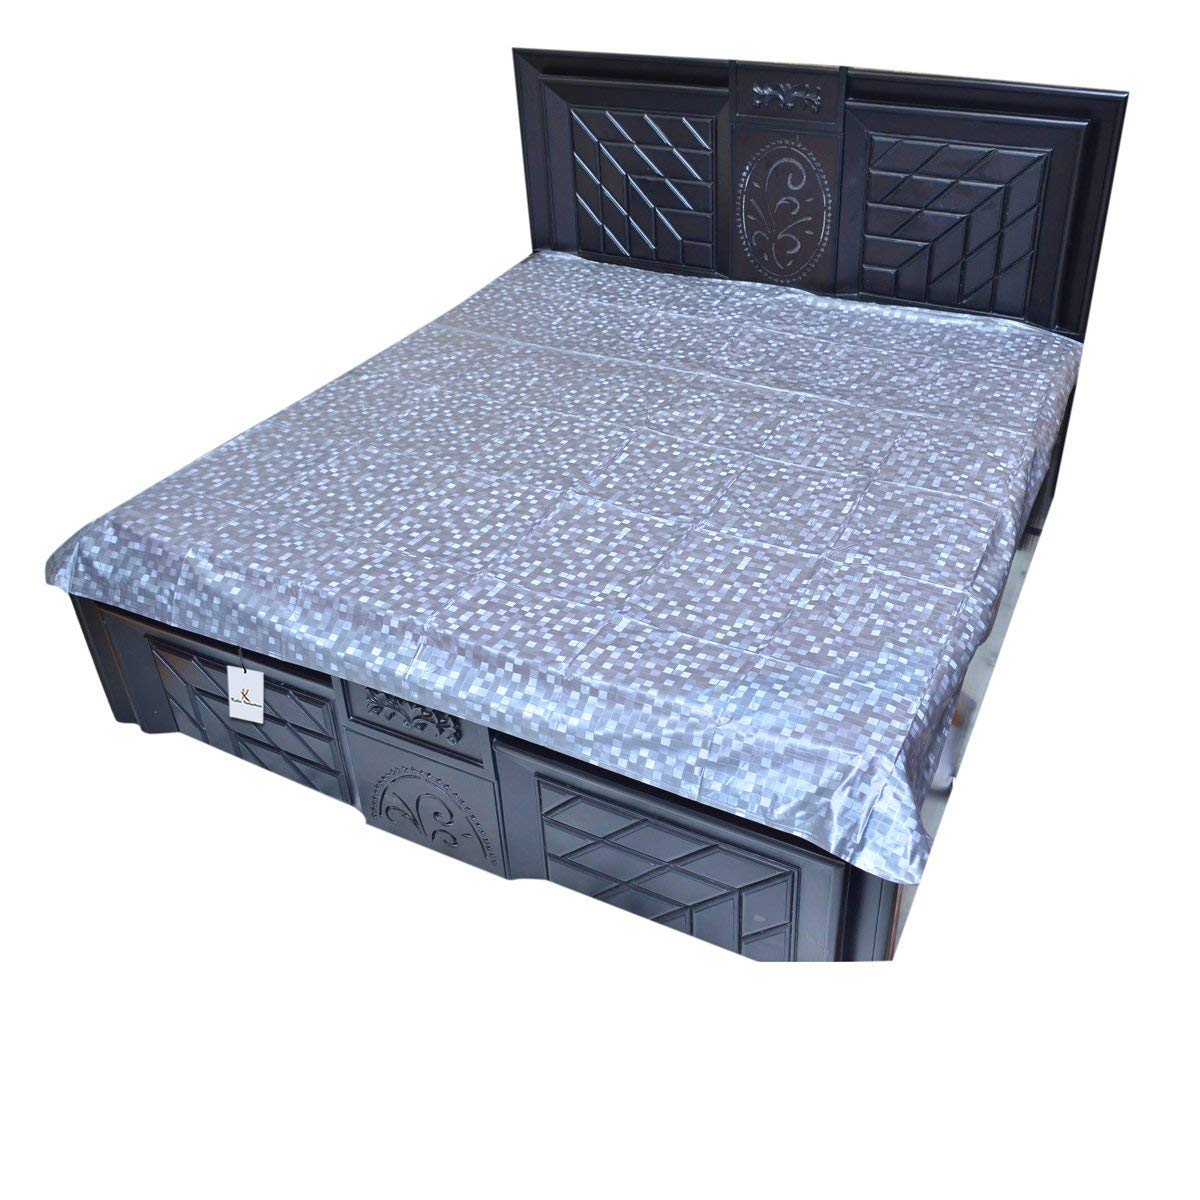 Kuber Industries PVC Double Bed Sheet, Grey, 6.5 * 6 Feet - Ctktc22301, Standard(Polyvinyl Chloride)